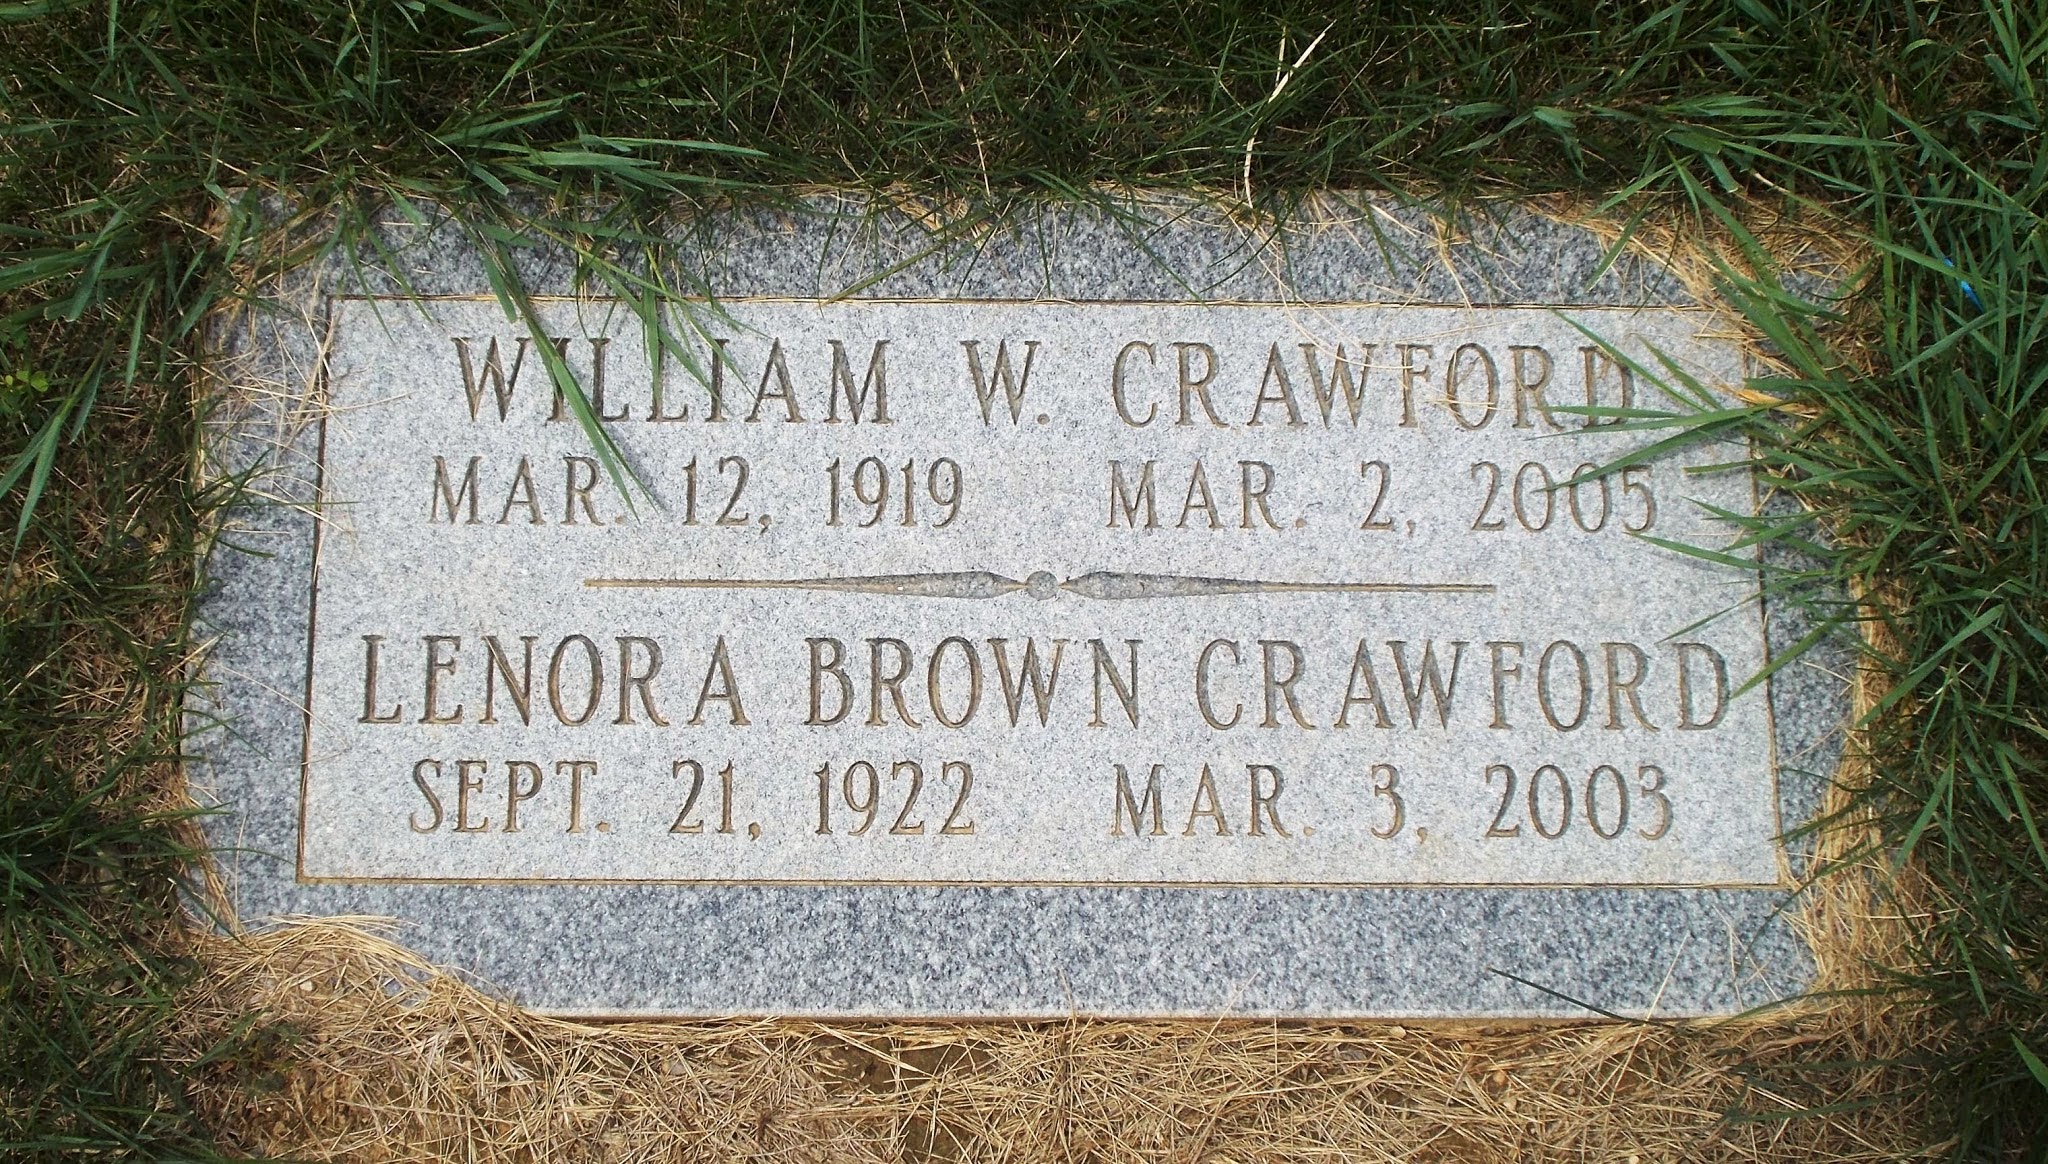 Lenora Brown Crawford